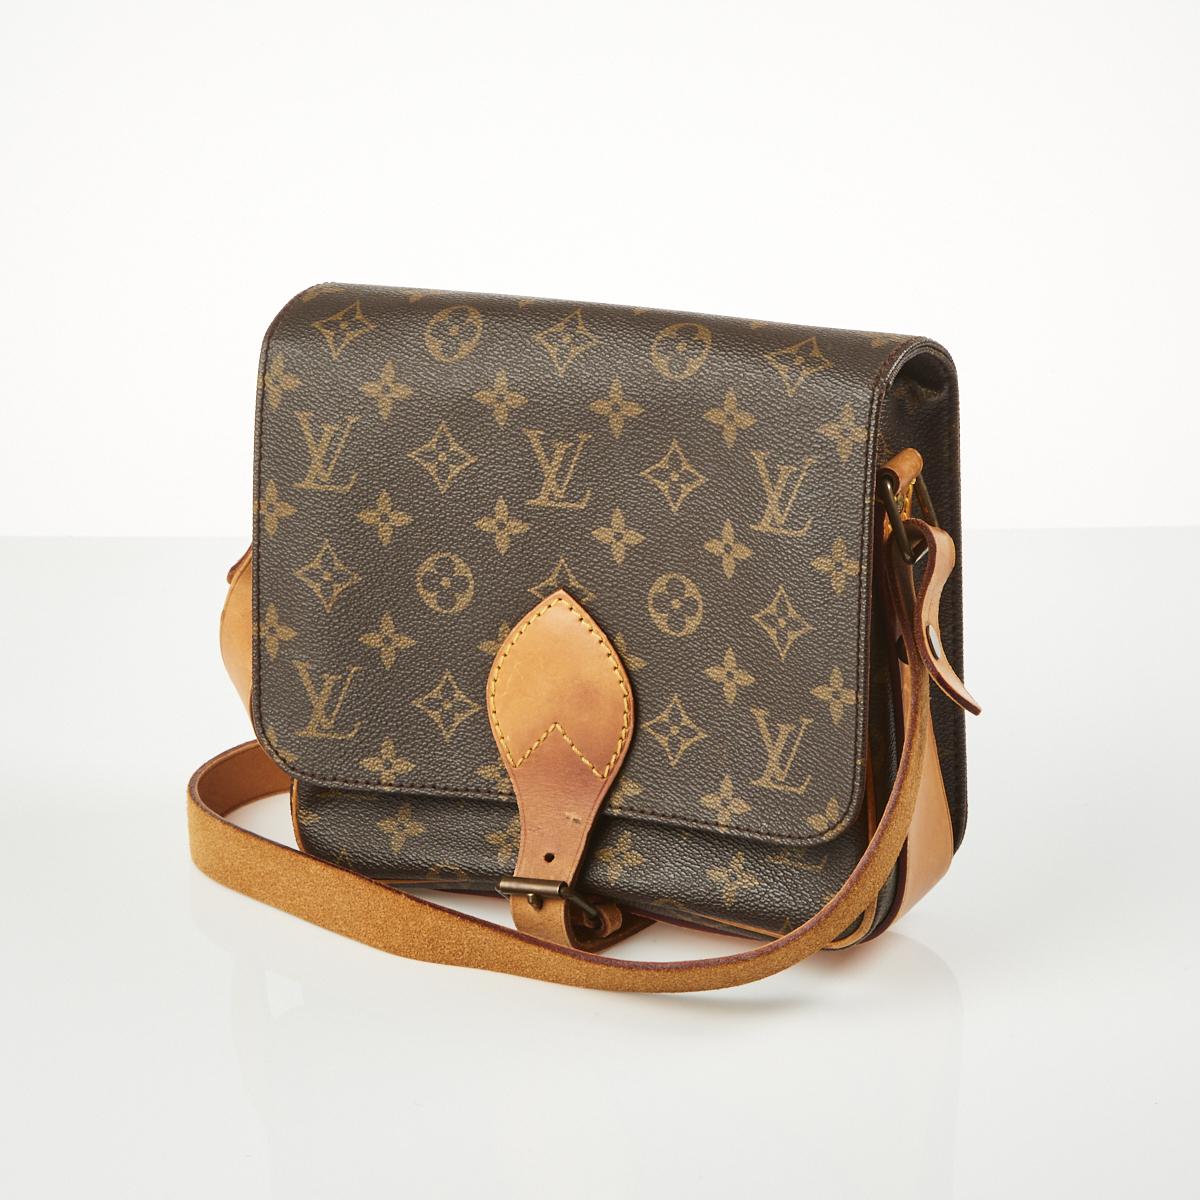 At Auction: A Louis Vuitton Monogram Cartouchiere Crossbody Bag.